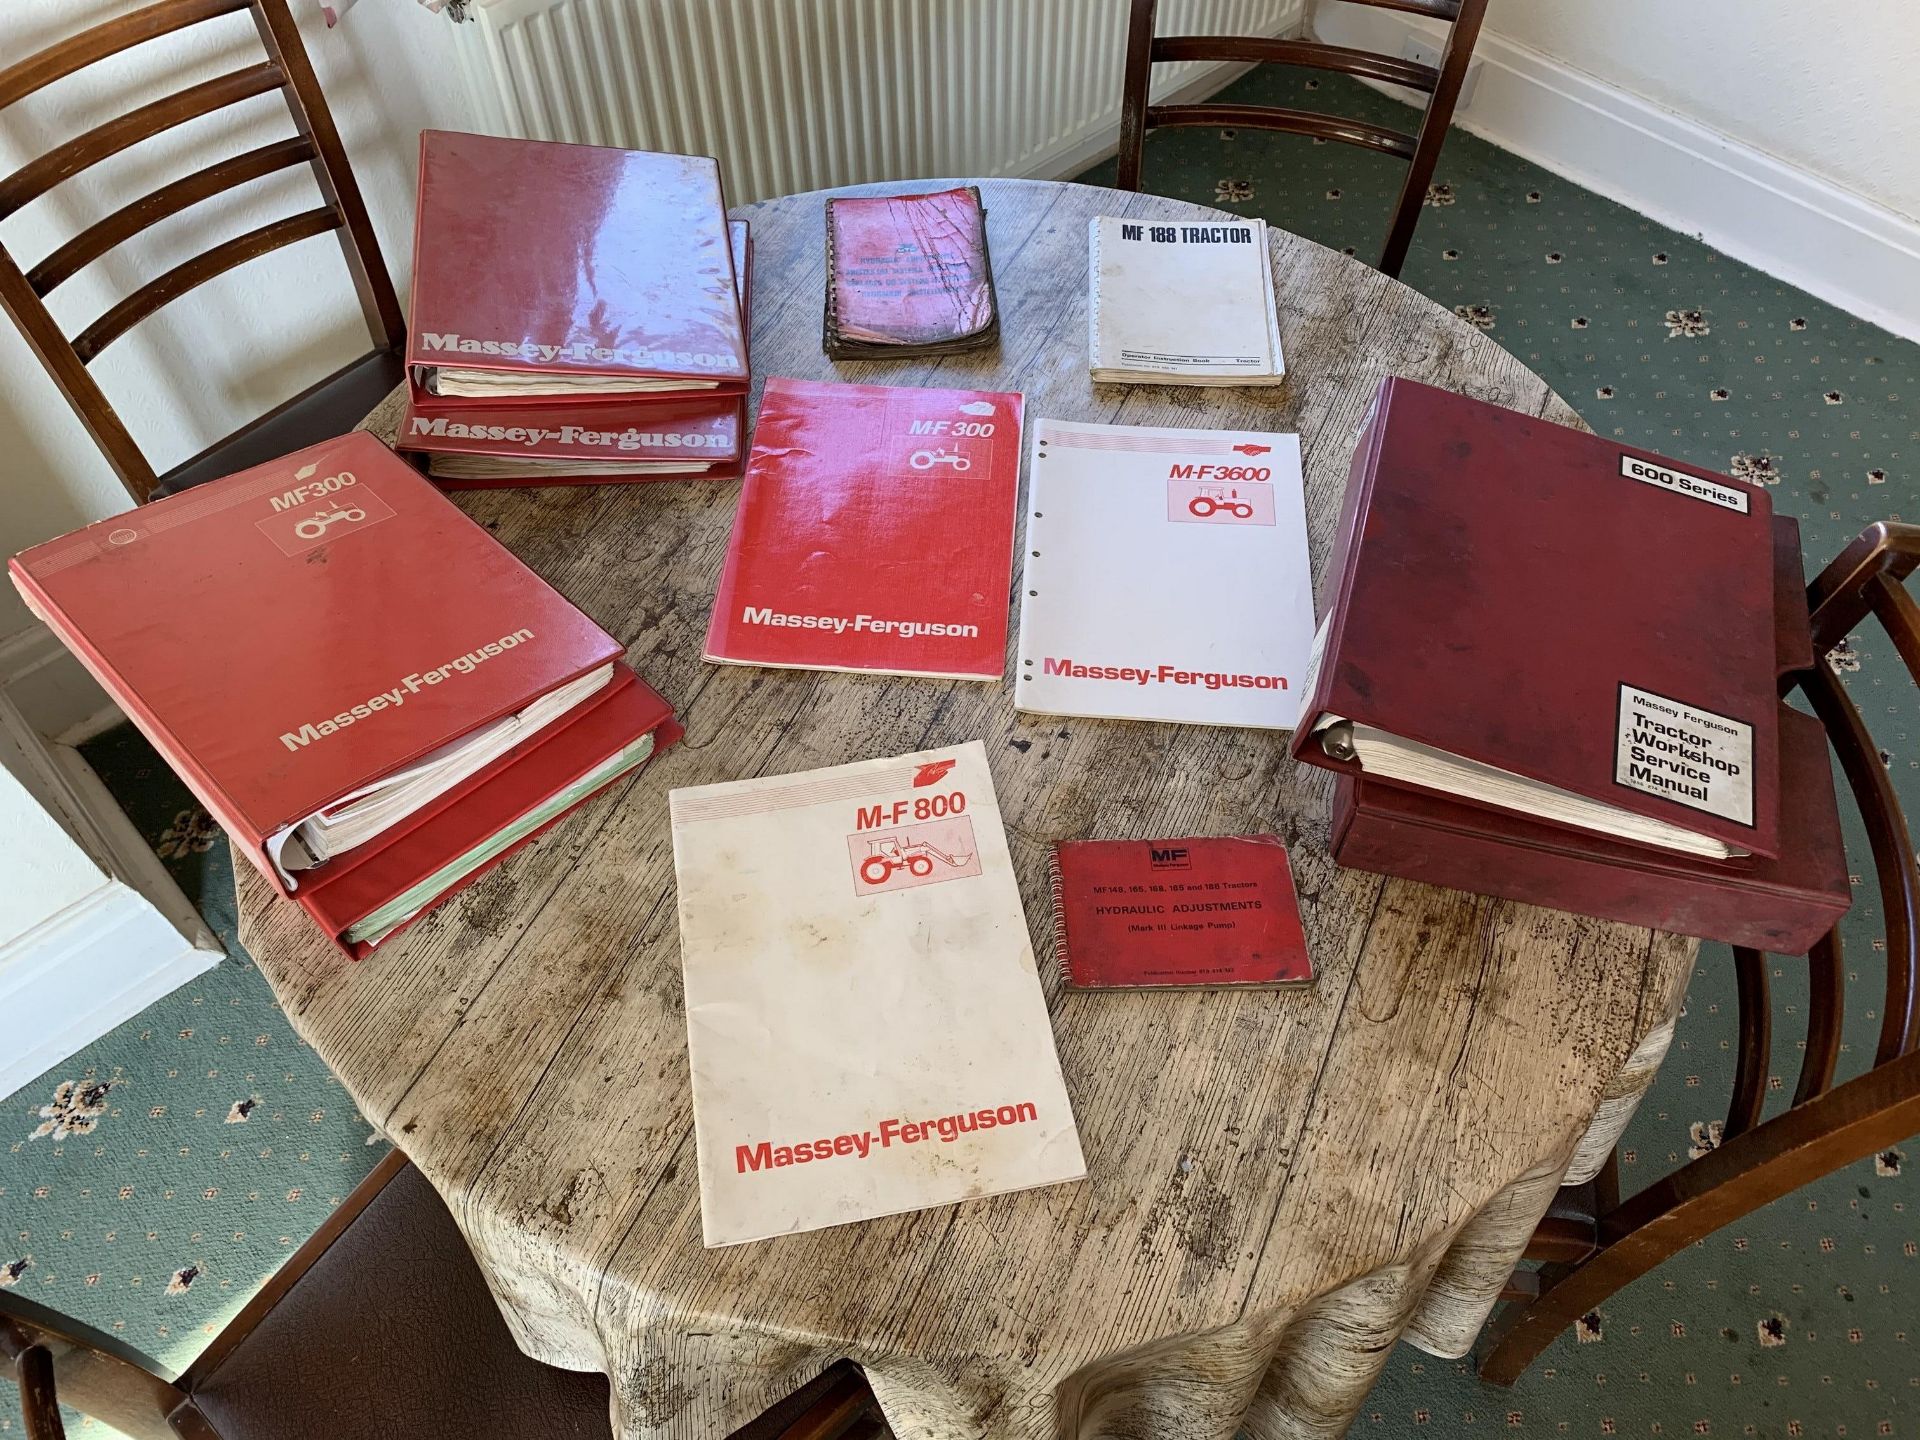 Quantity of Massey Ferguson manuals